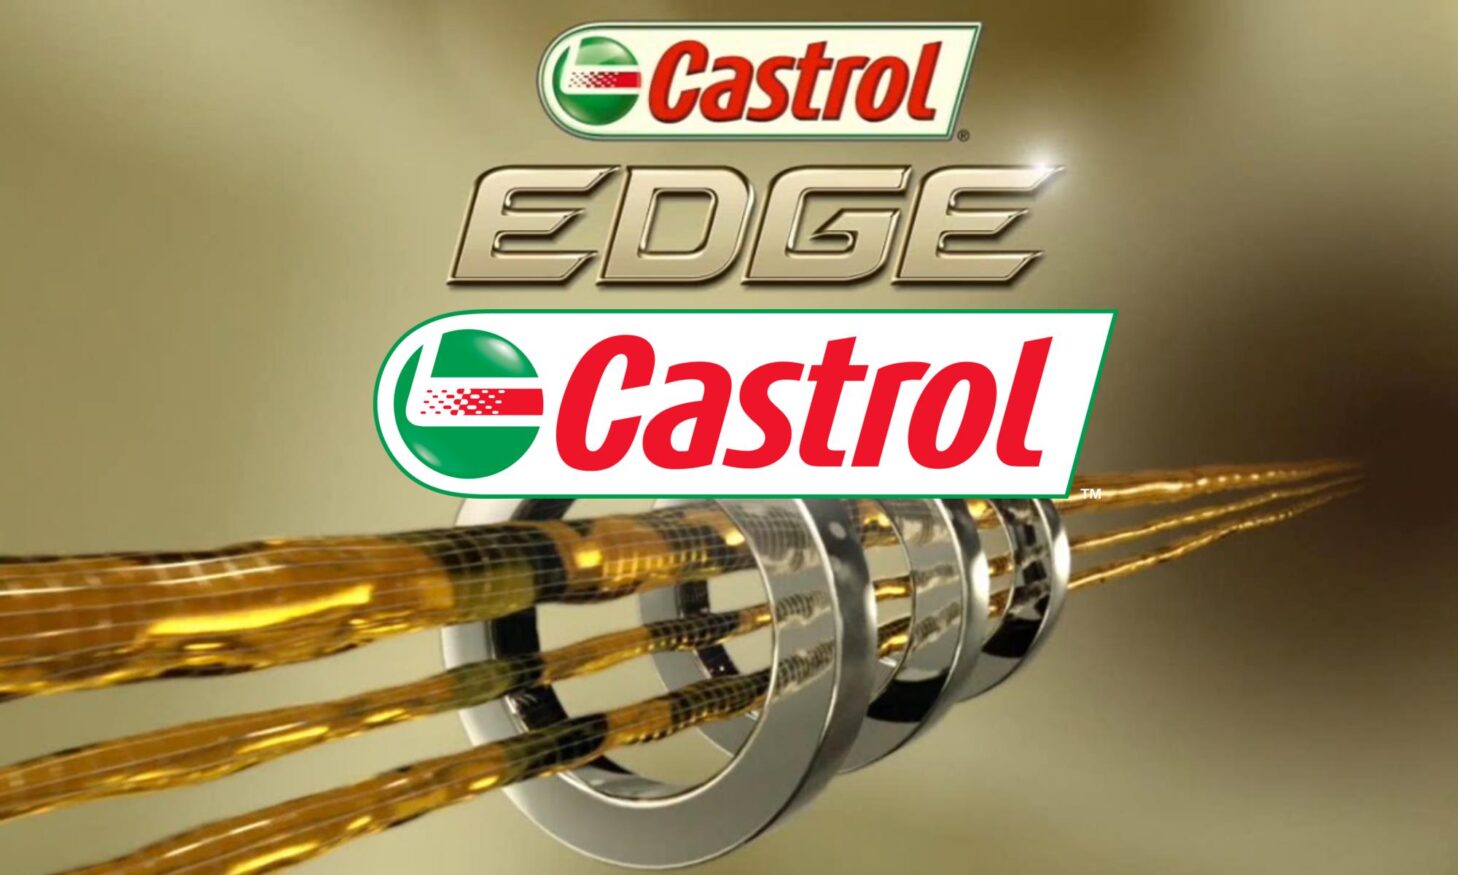 castrol oil - logo advertising